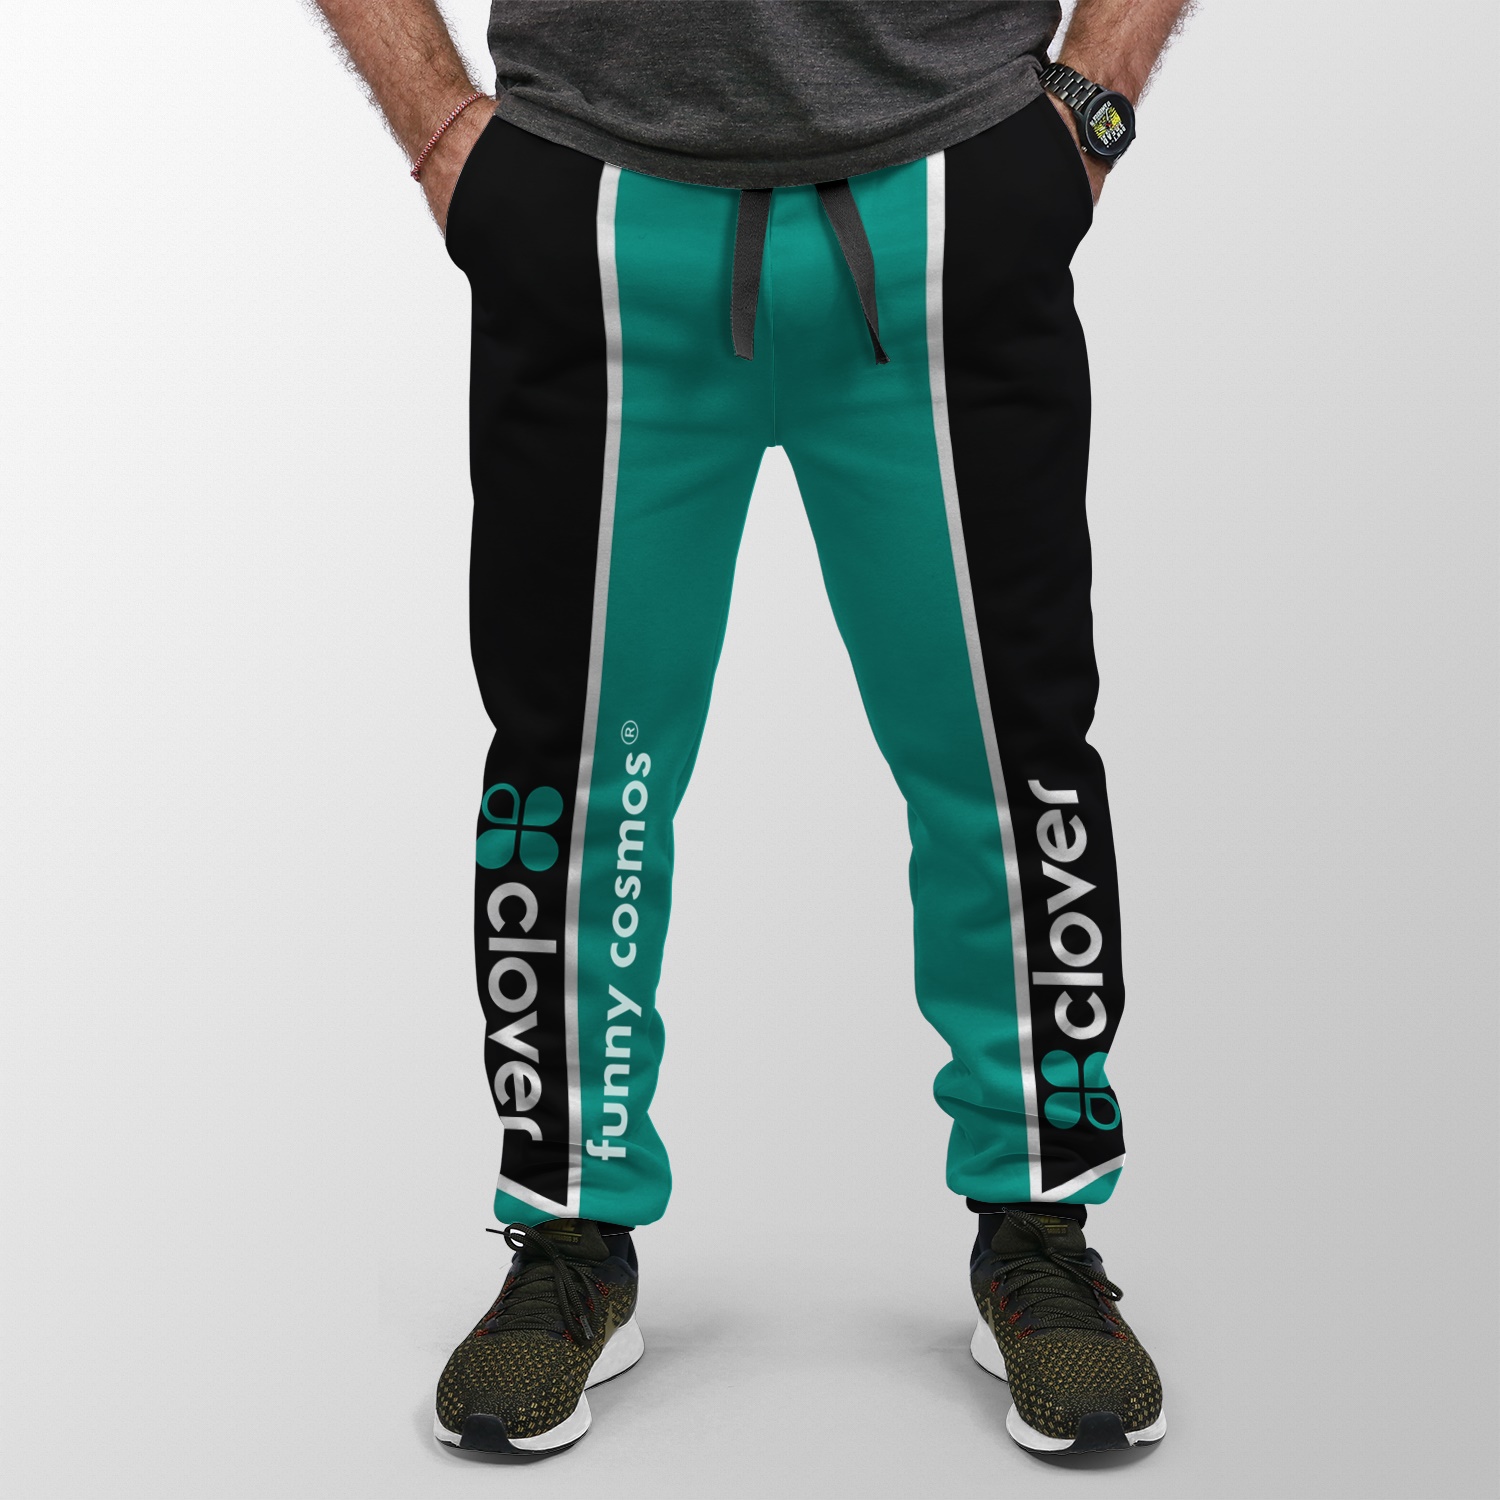 Ross Chastain Nascar 2022 Shirt Hoodie Racing Uniform Clothes Sweatshirt Zip Hoodie Sweatpant